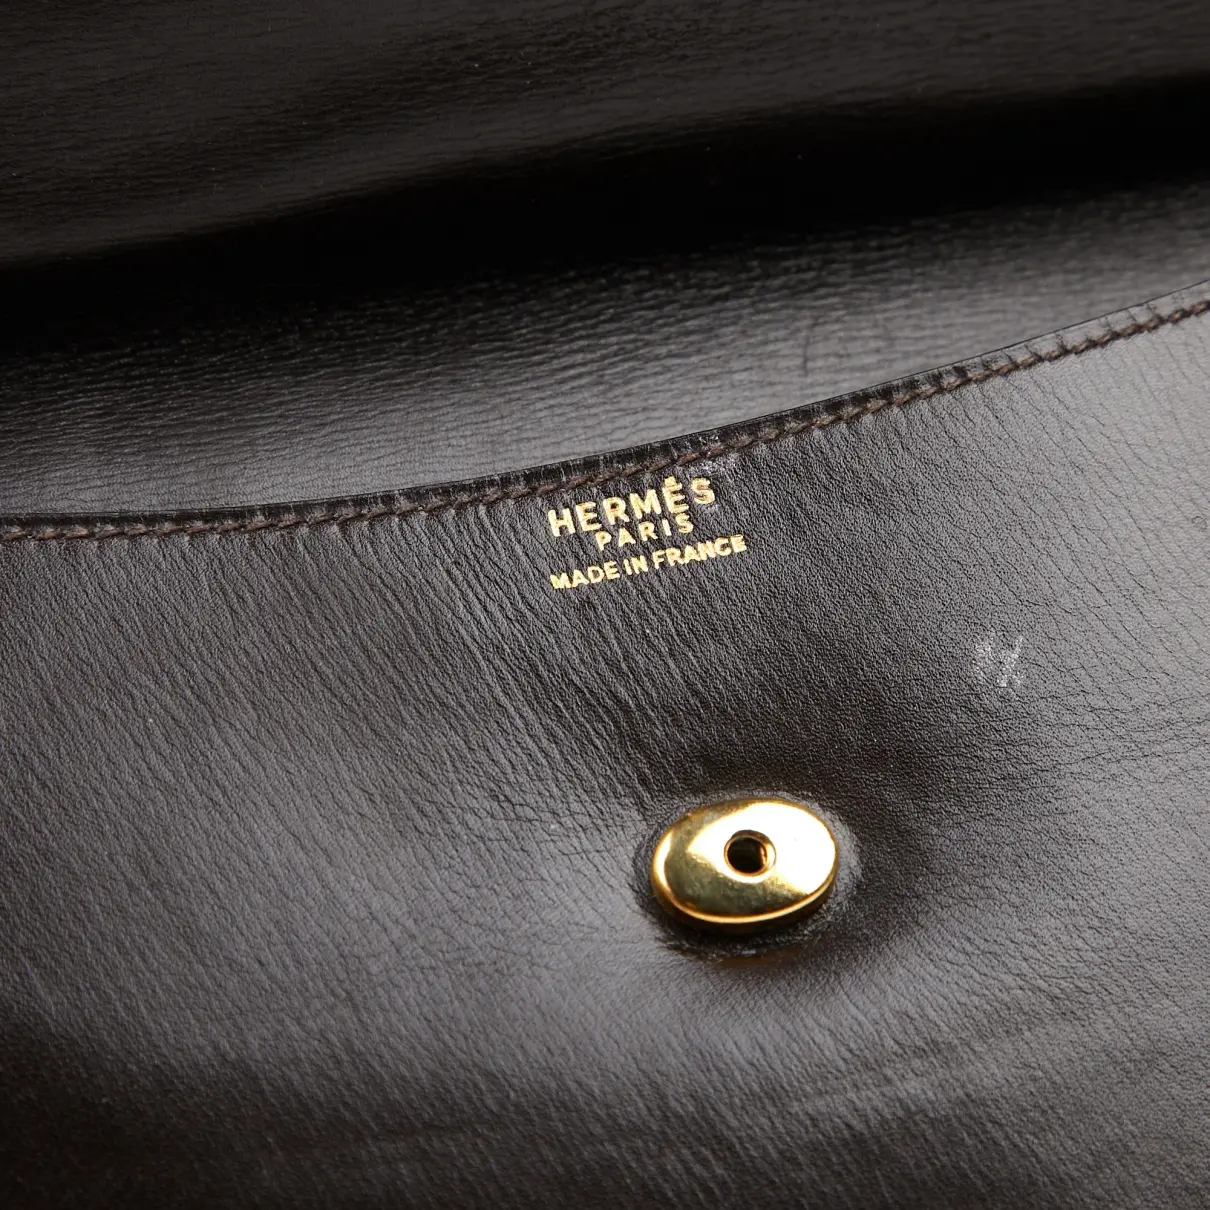 Rio leather clutch bag Hermès